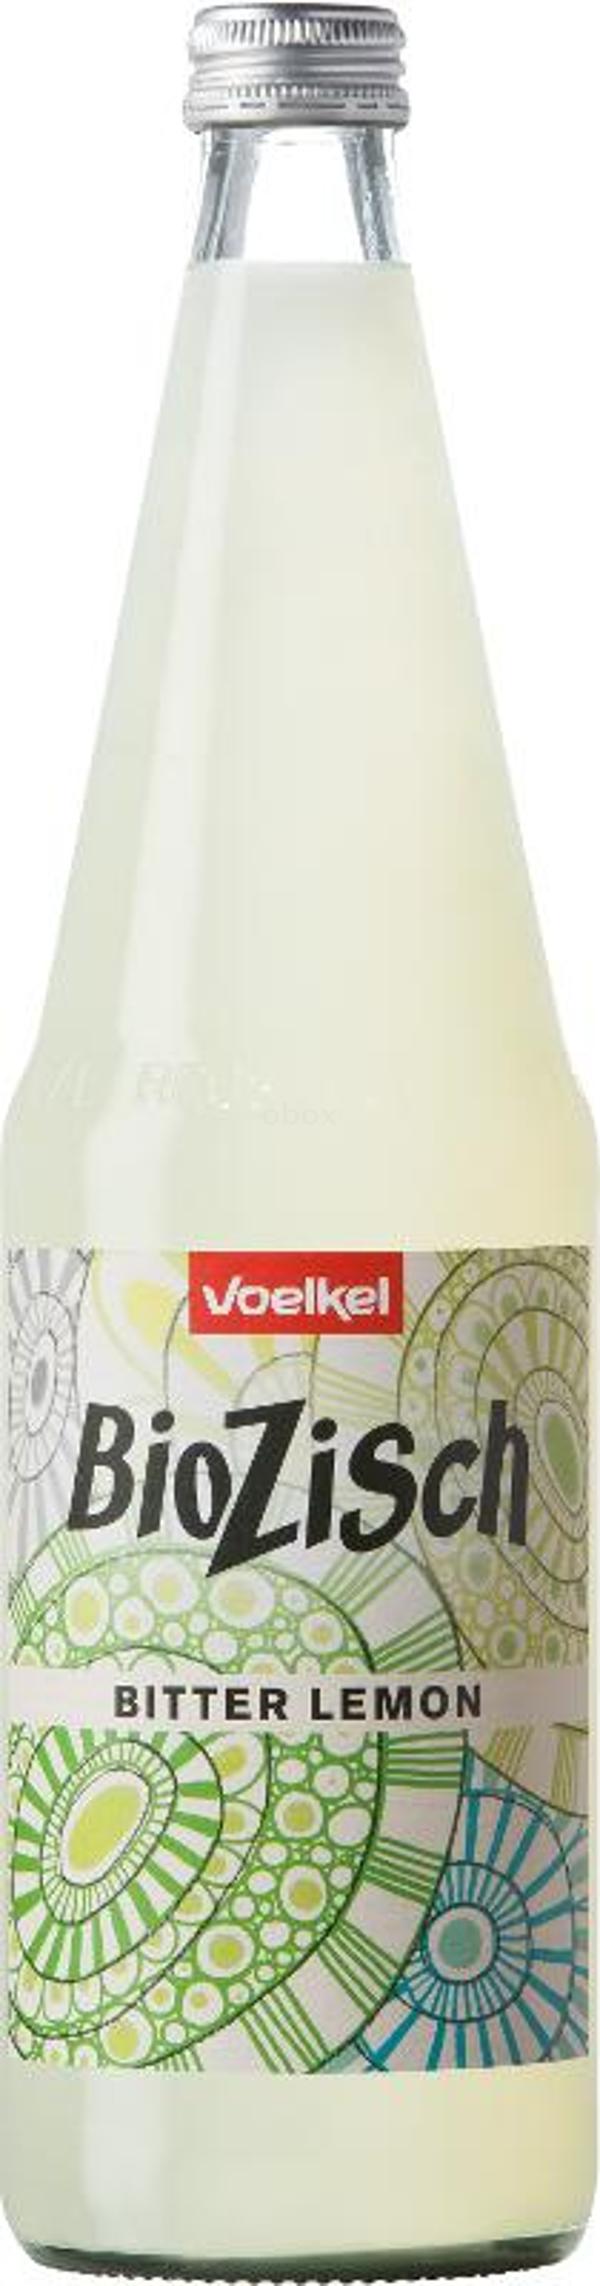 Produktfoto zu BioZisch Bitter Lemon Kiste 6*0,7L